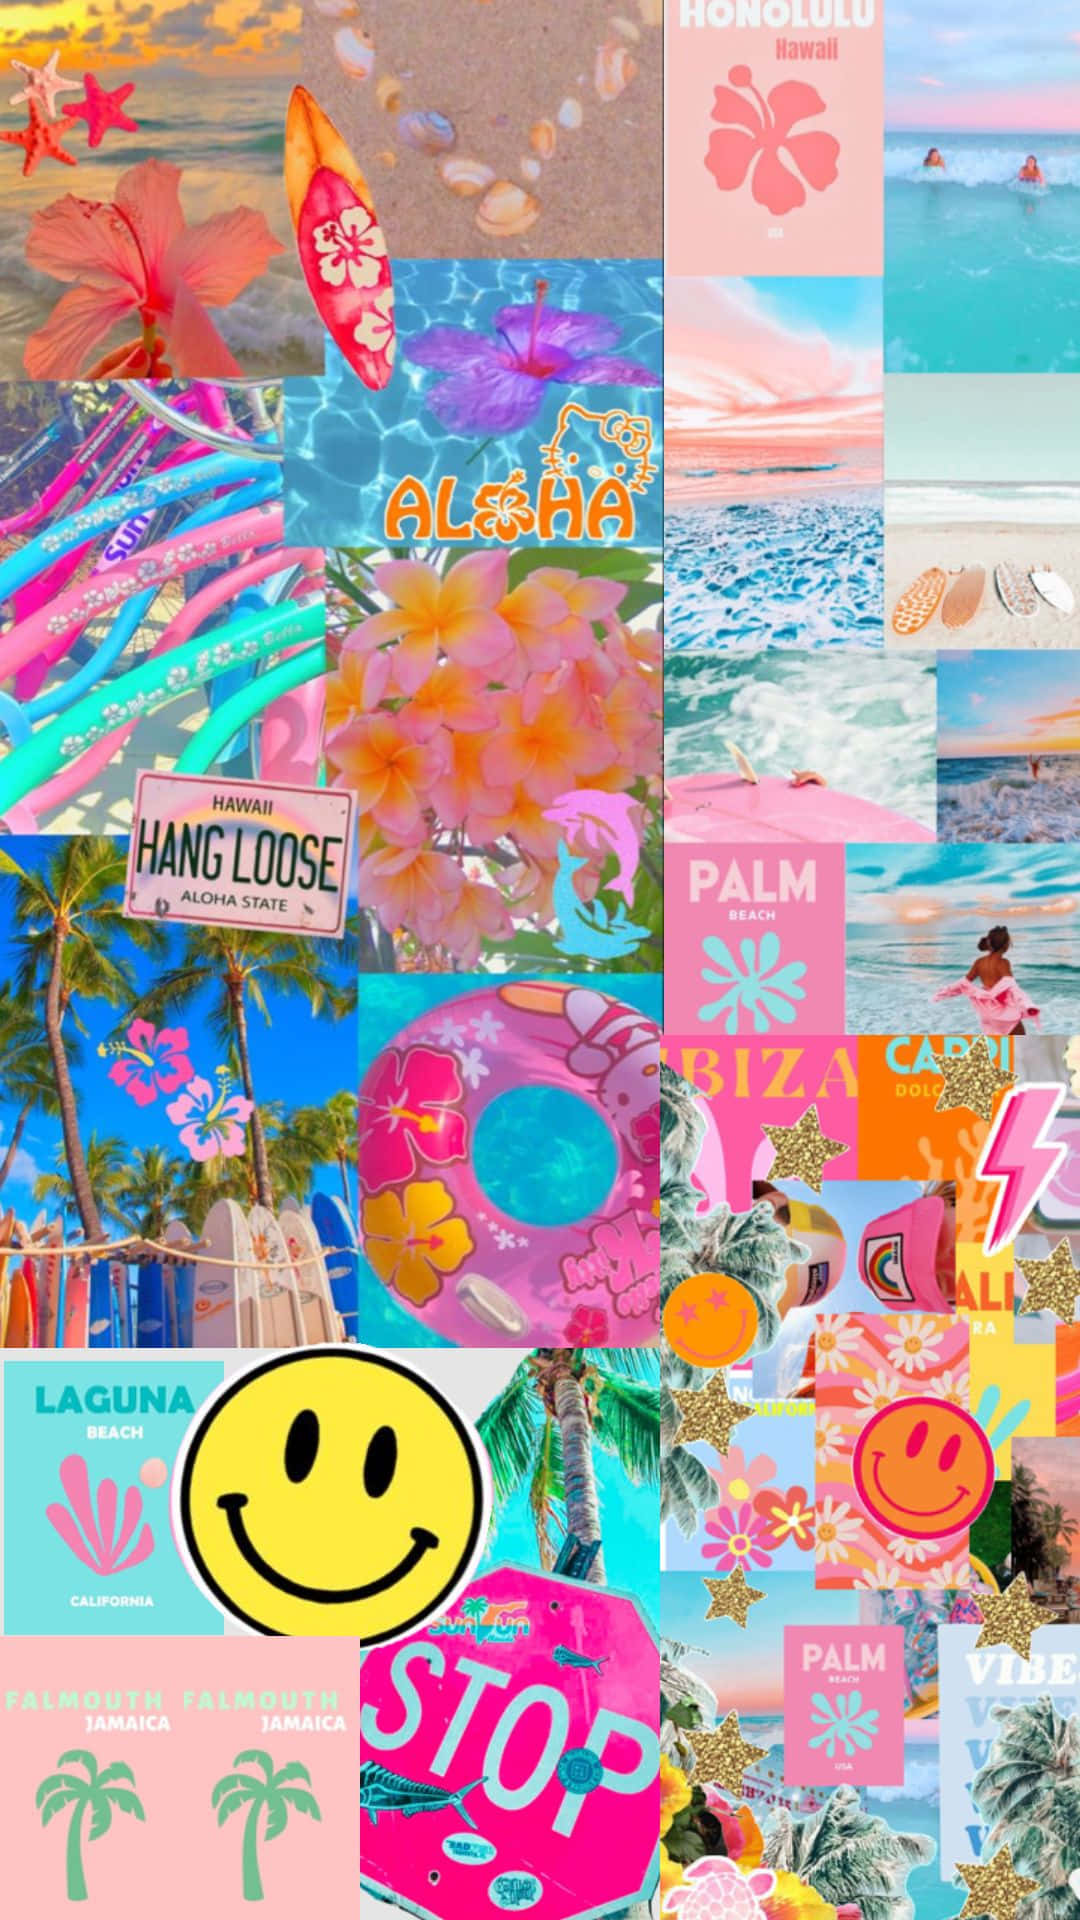 Beach Girl Aesthetic Collage Wallpaper